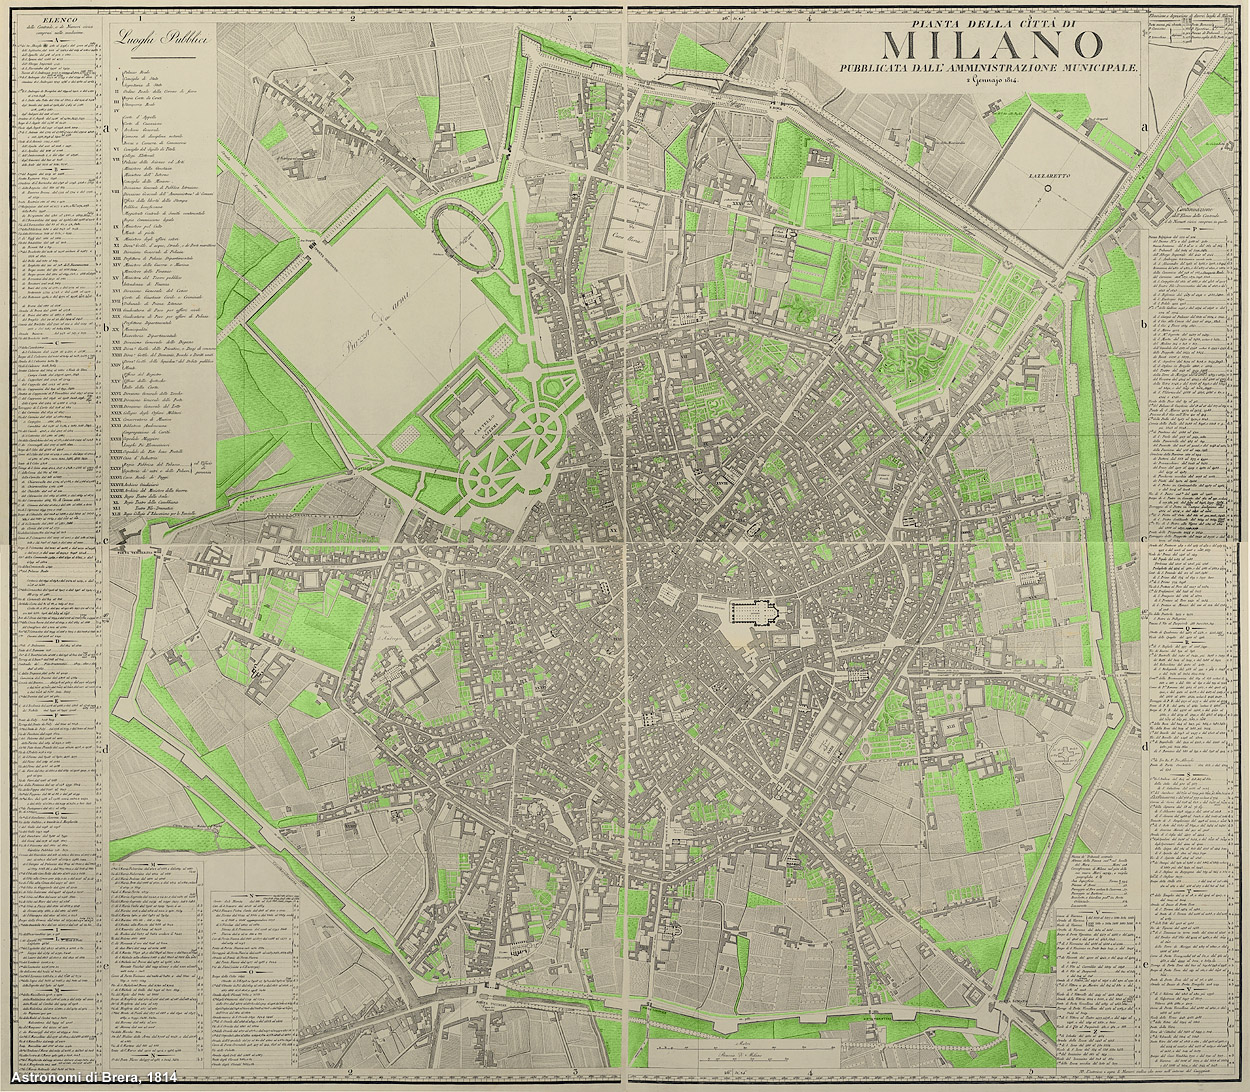 Milano, 1814 - Prati e giardini.